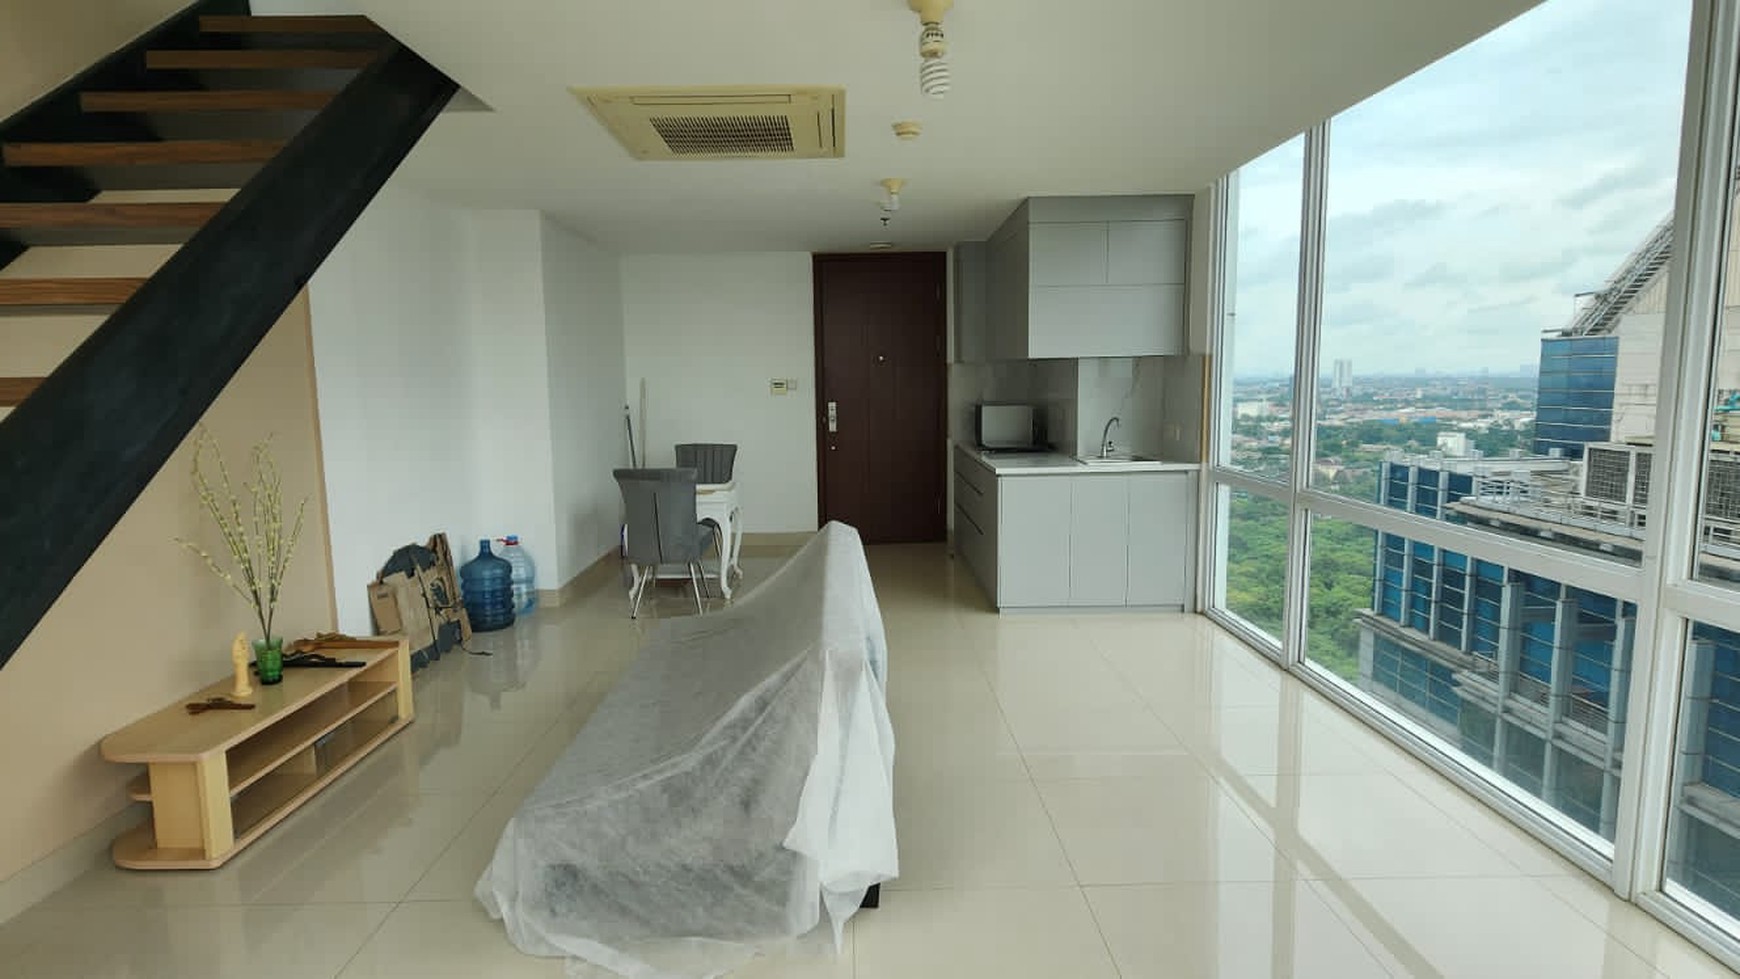 Jual Apartemen Bizloft Tower 5 Lippo Karawaci Tangerang